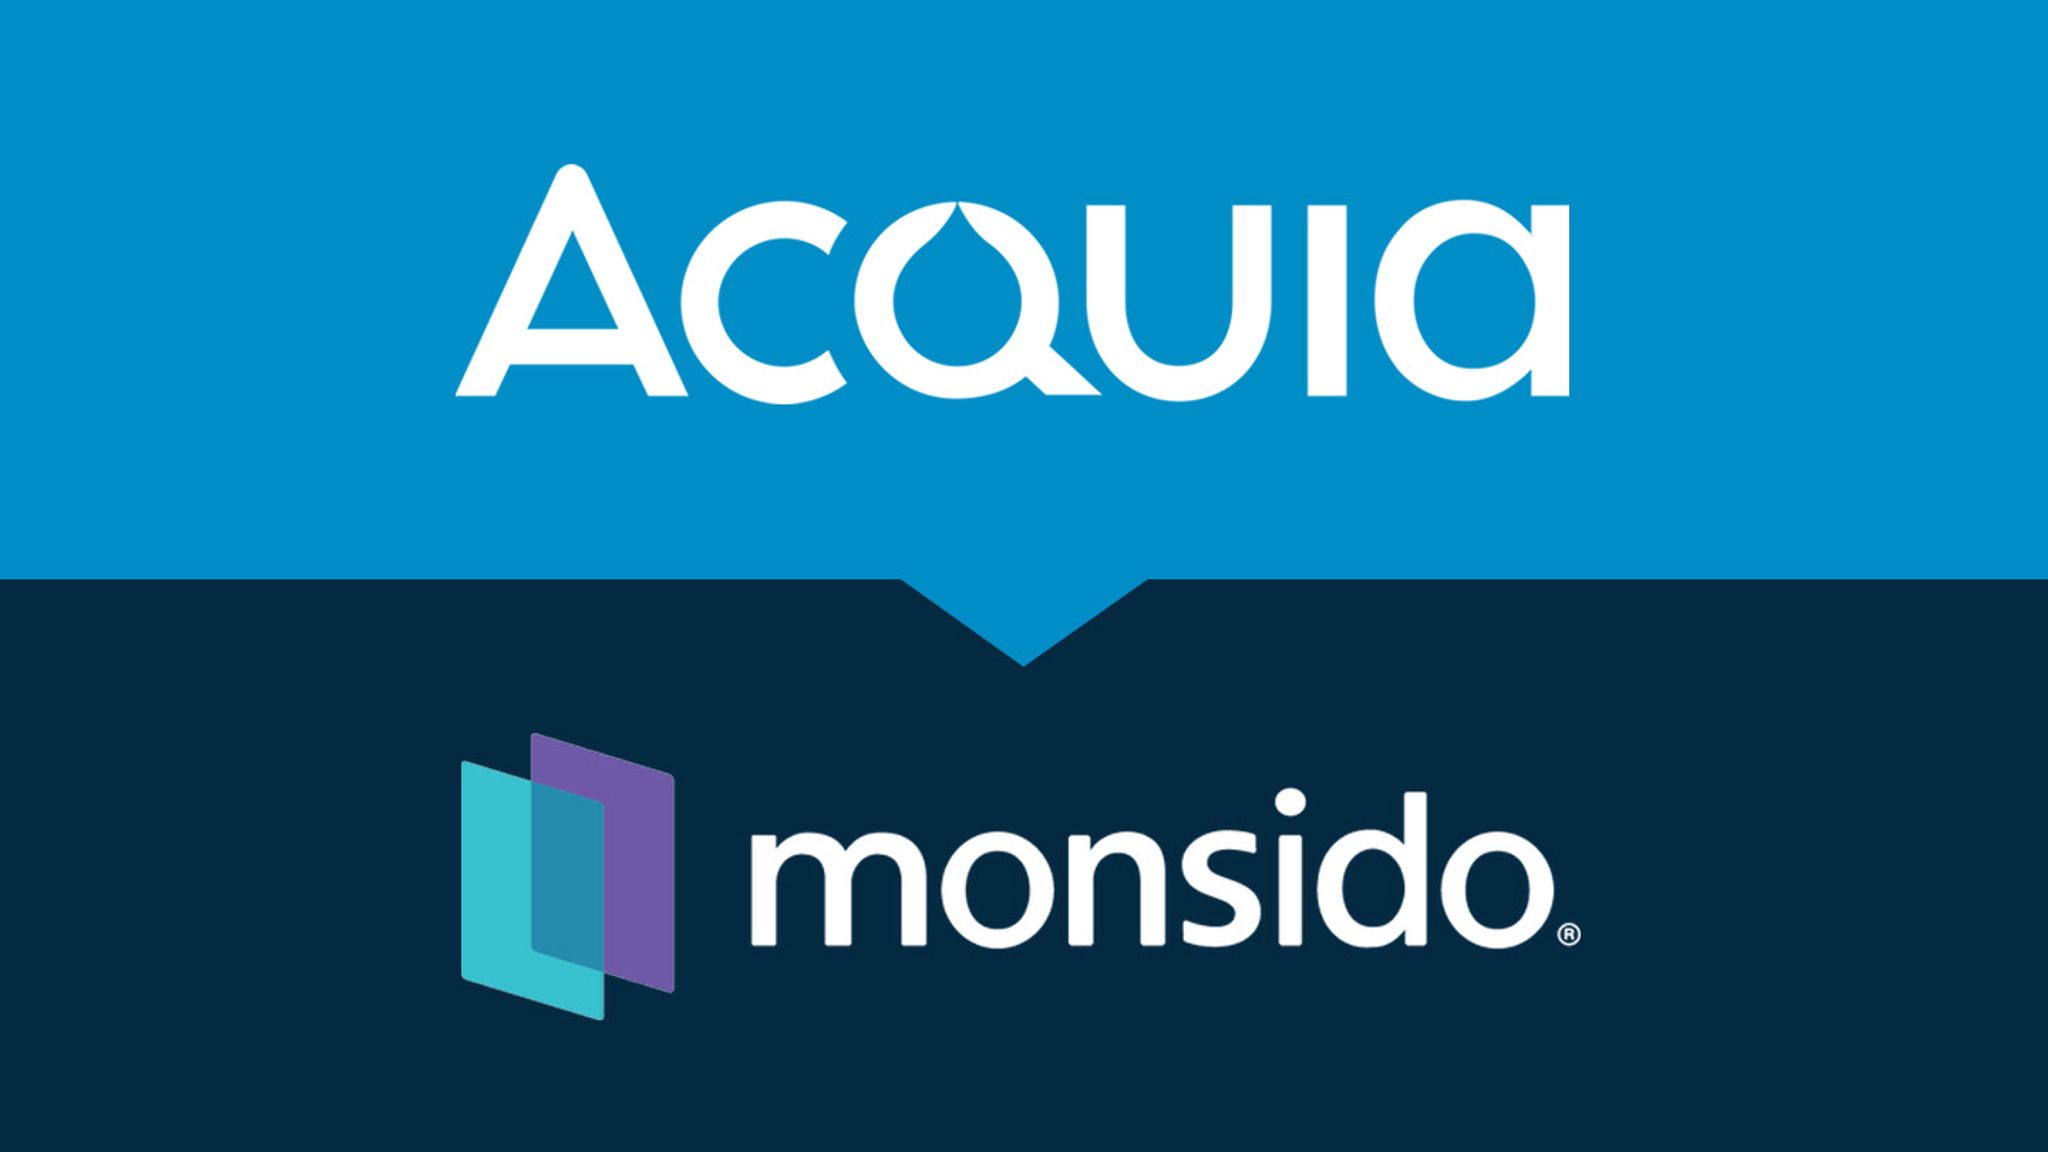 Acquia and Monsido logos